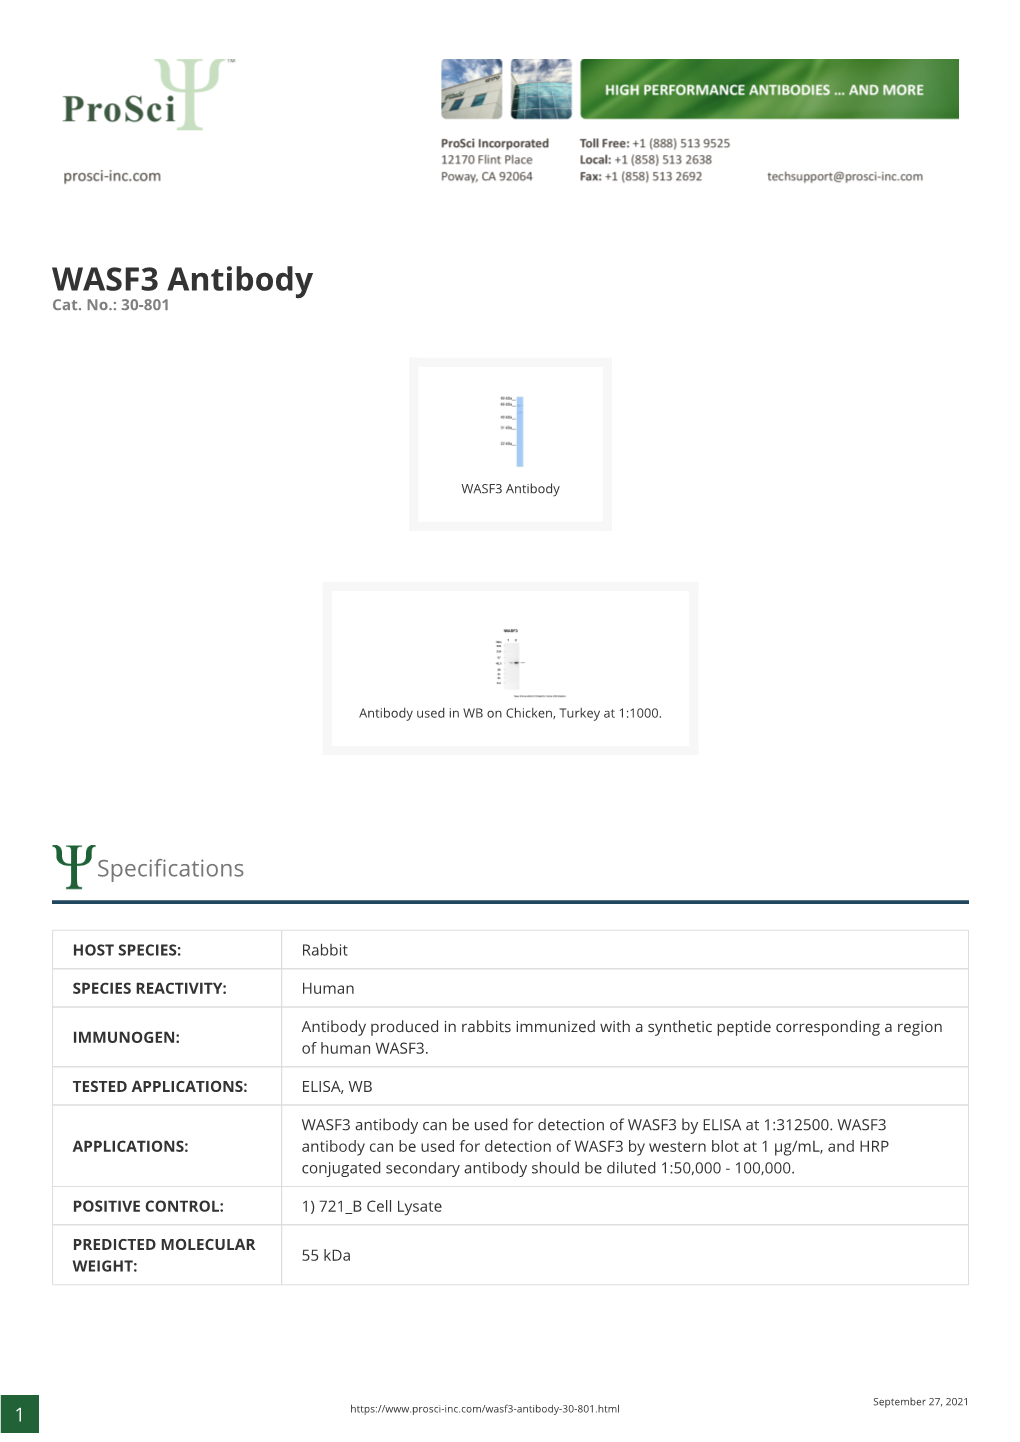 WASF3 Antibody Cat